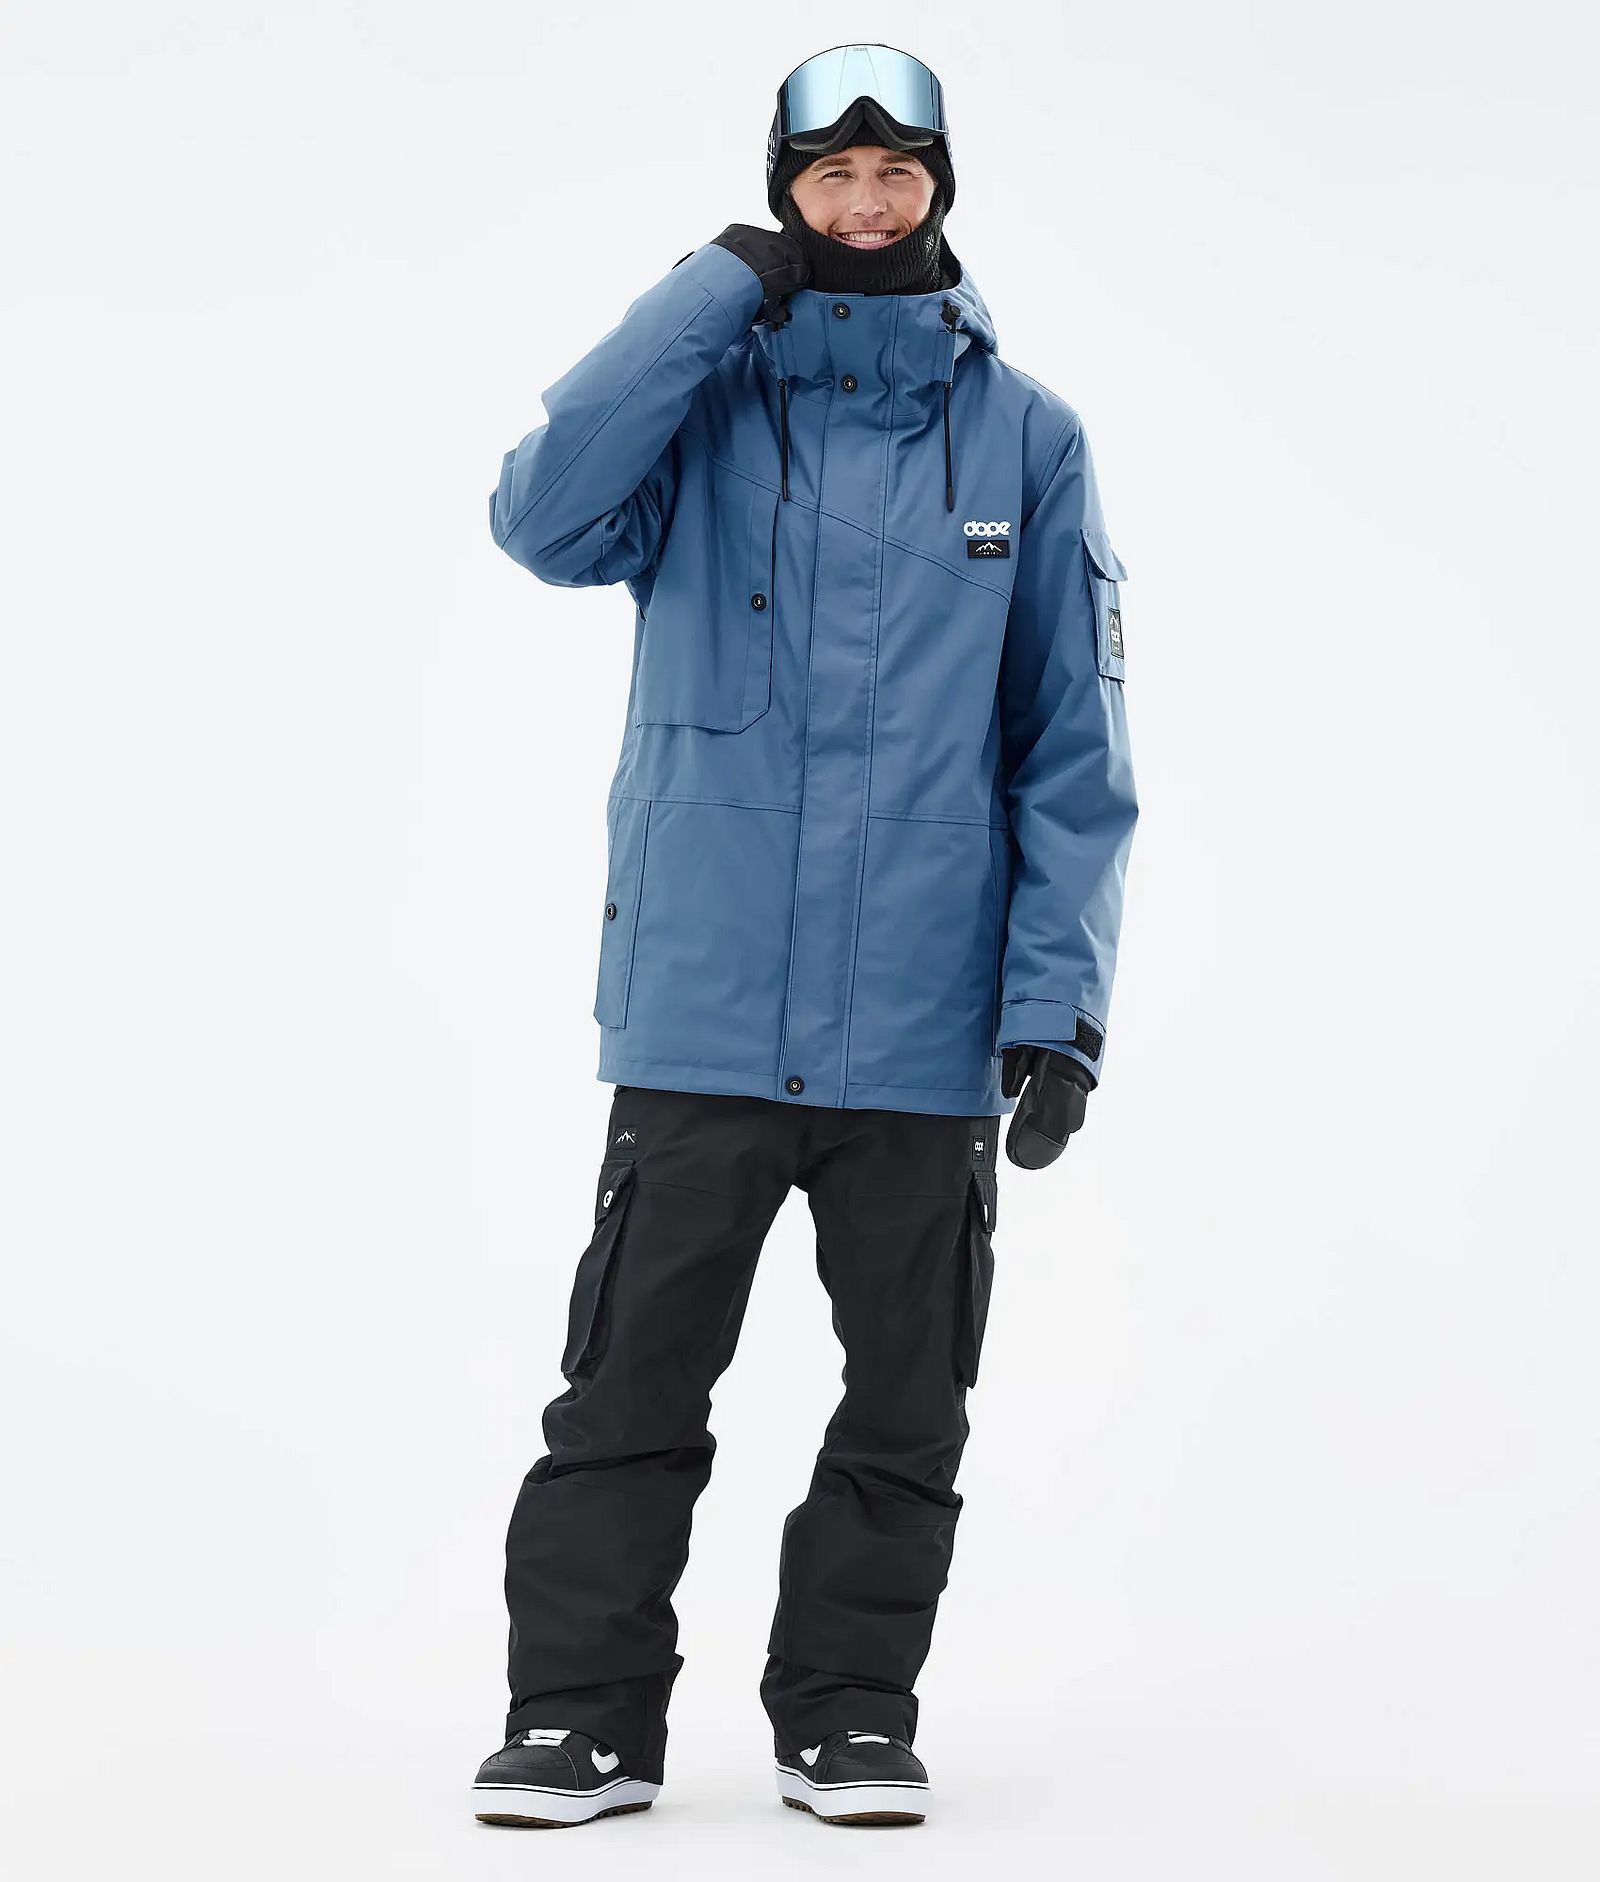 Adept Outfit de Snowboard Hombre Blue Steel/Black